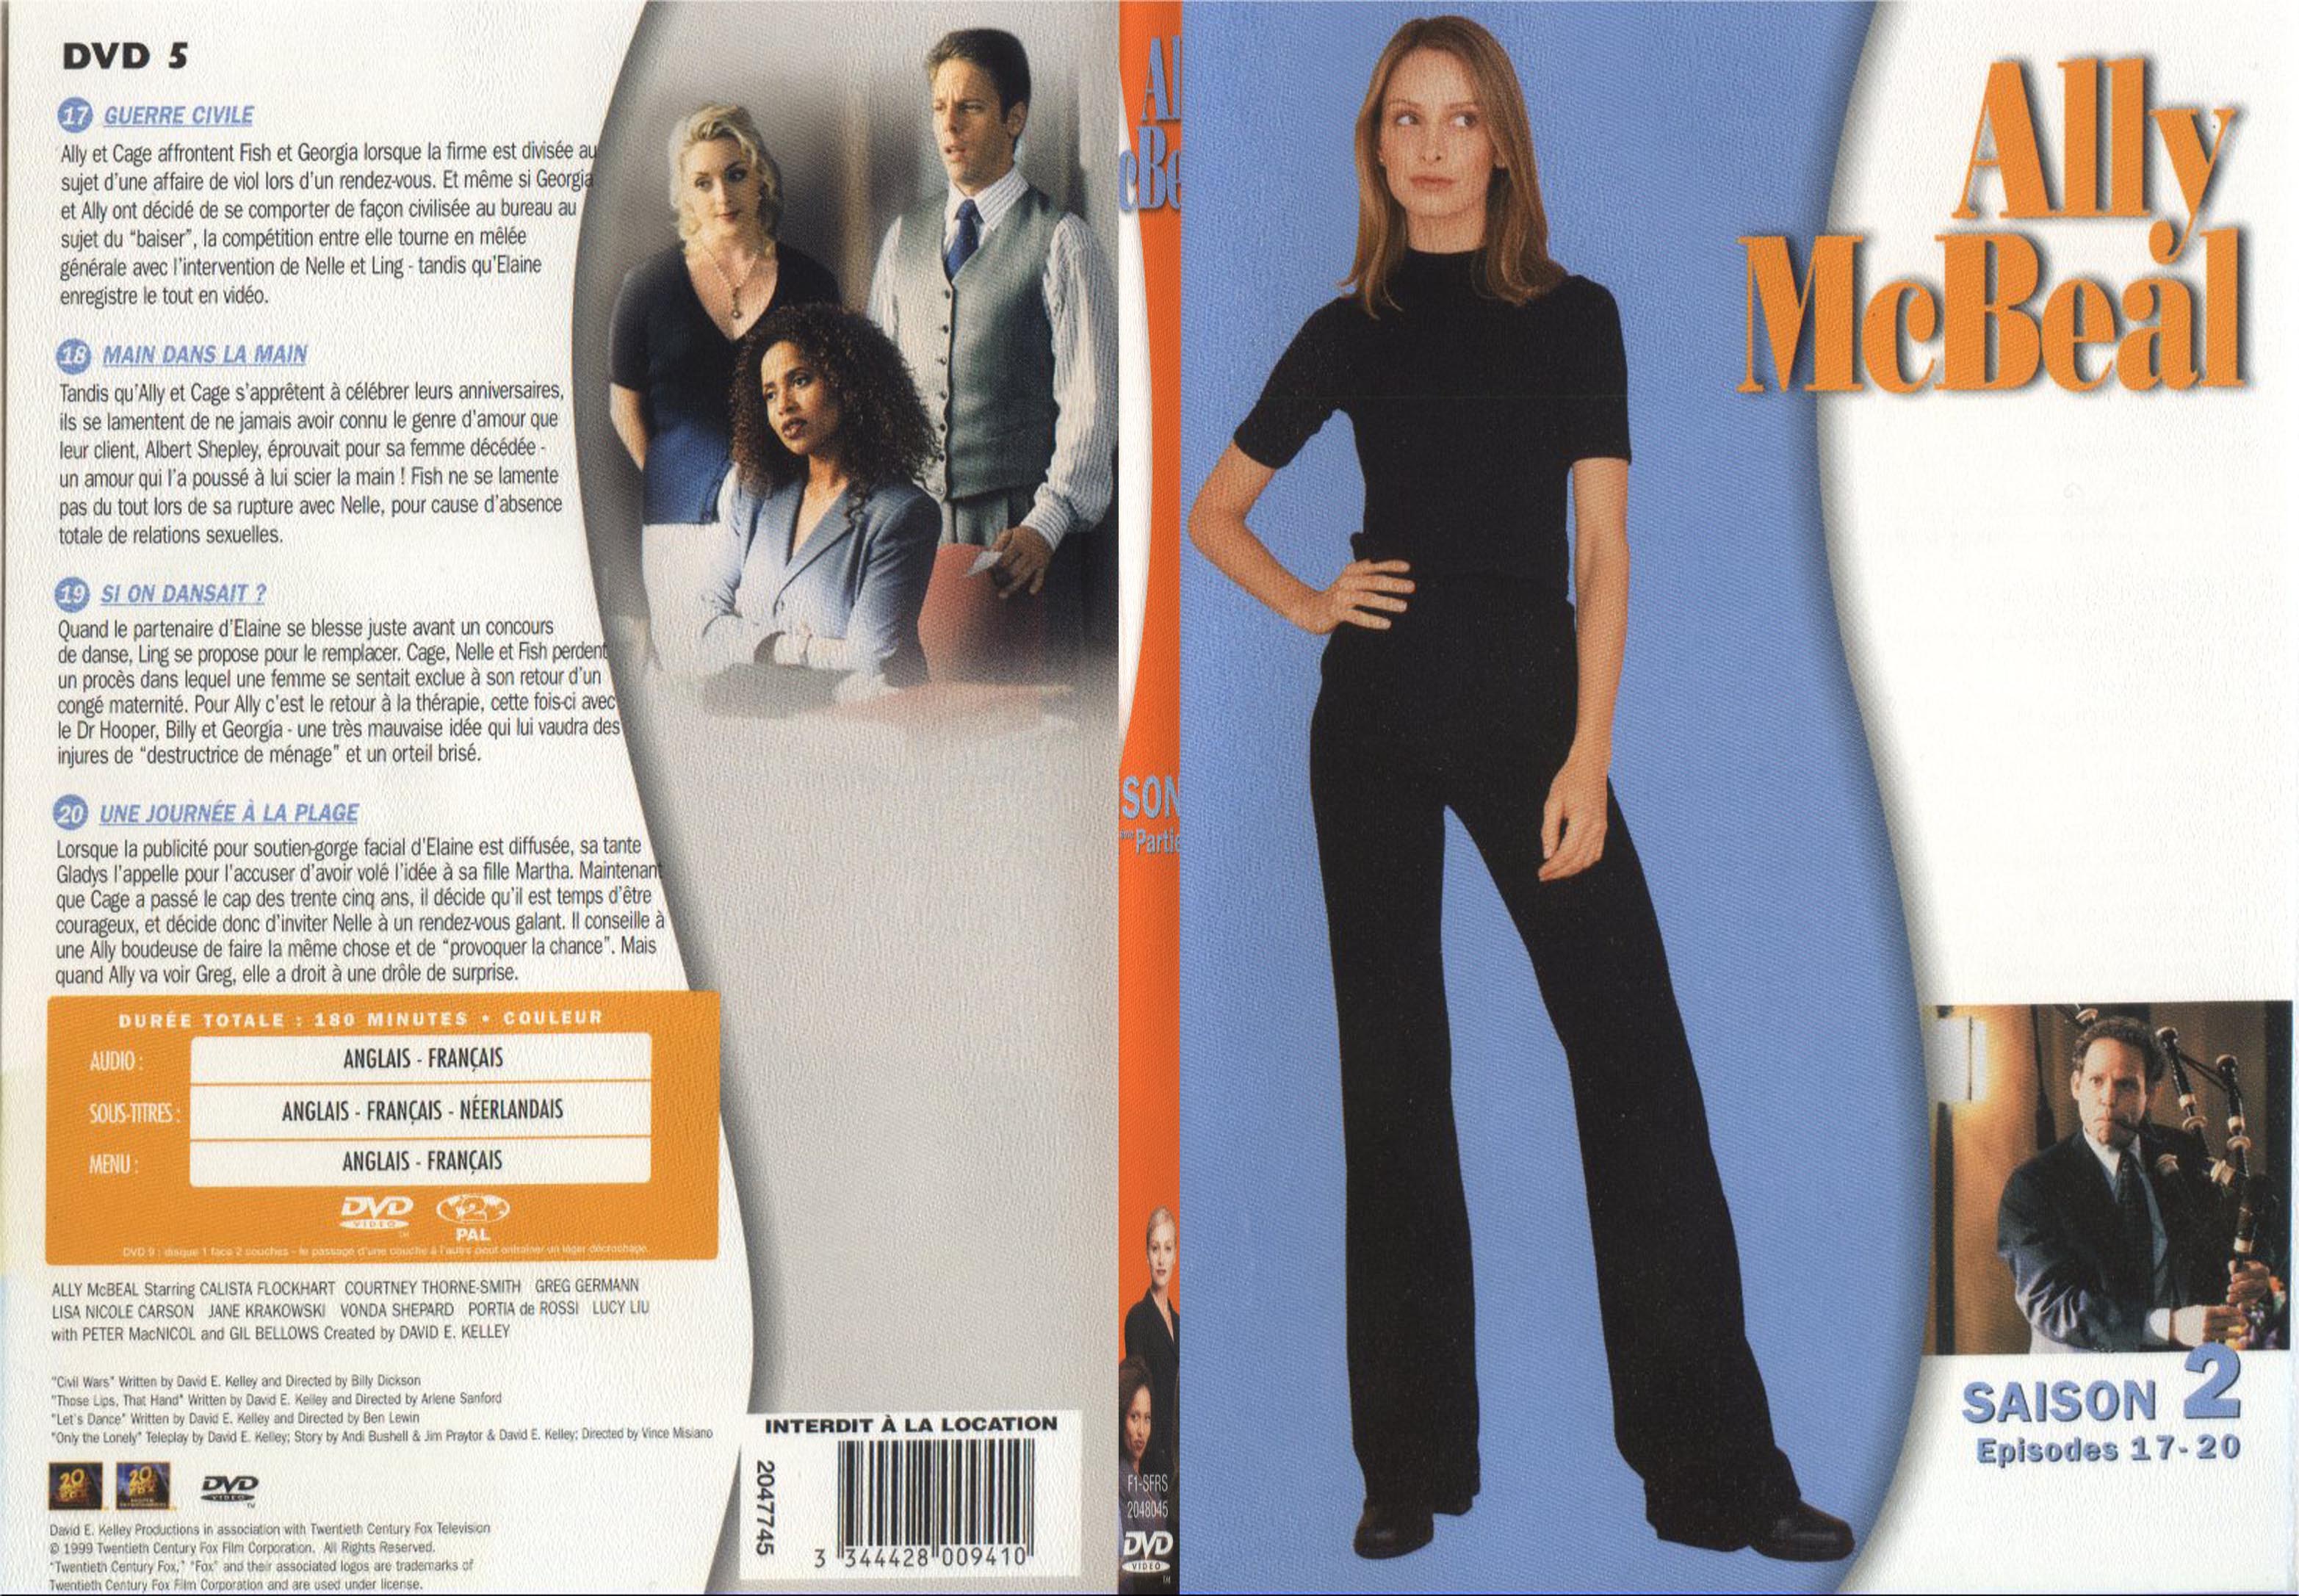 Jaquette DVD Ally McBeal saison 2 dvd 5 - SLIM